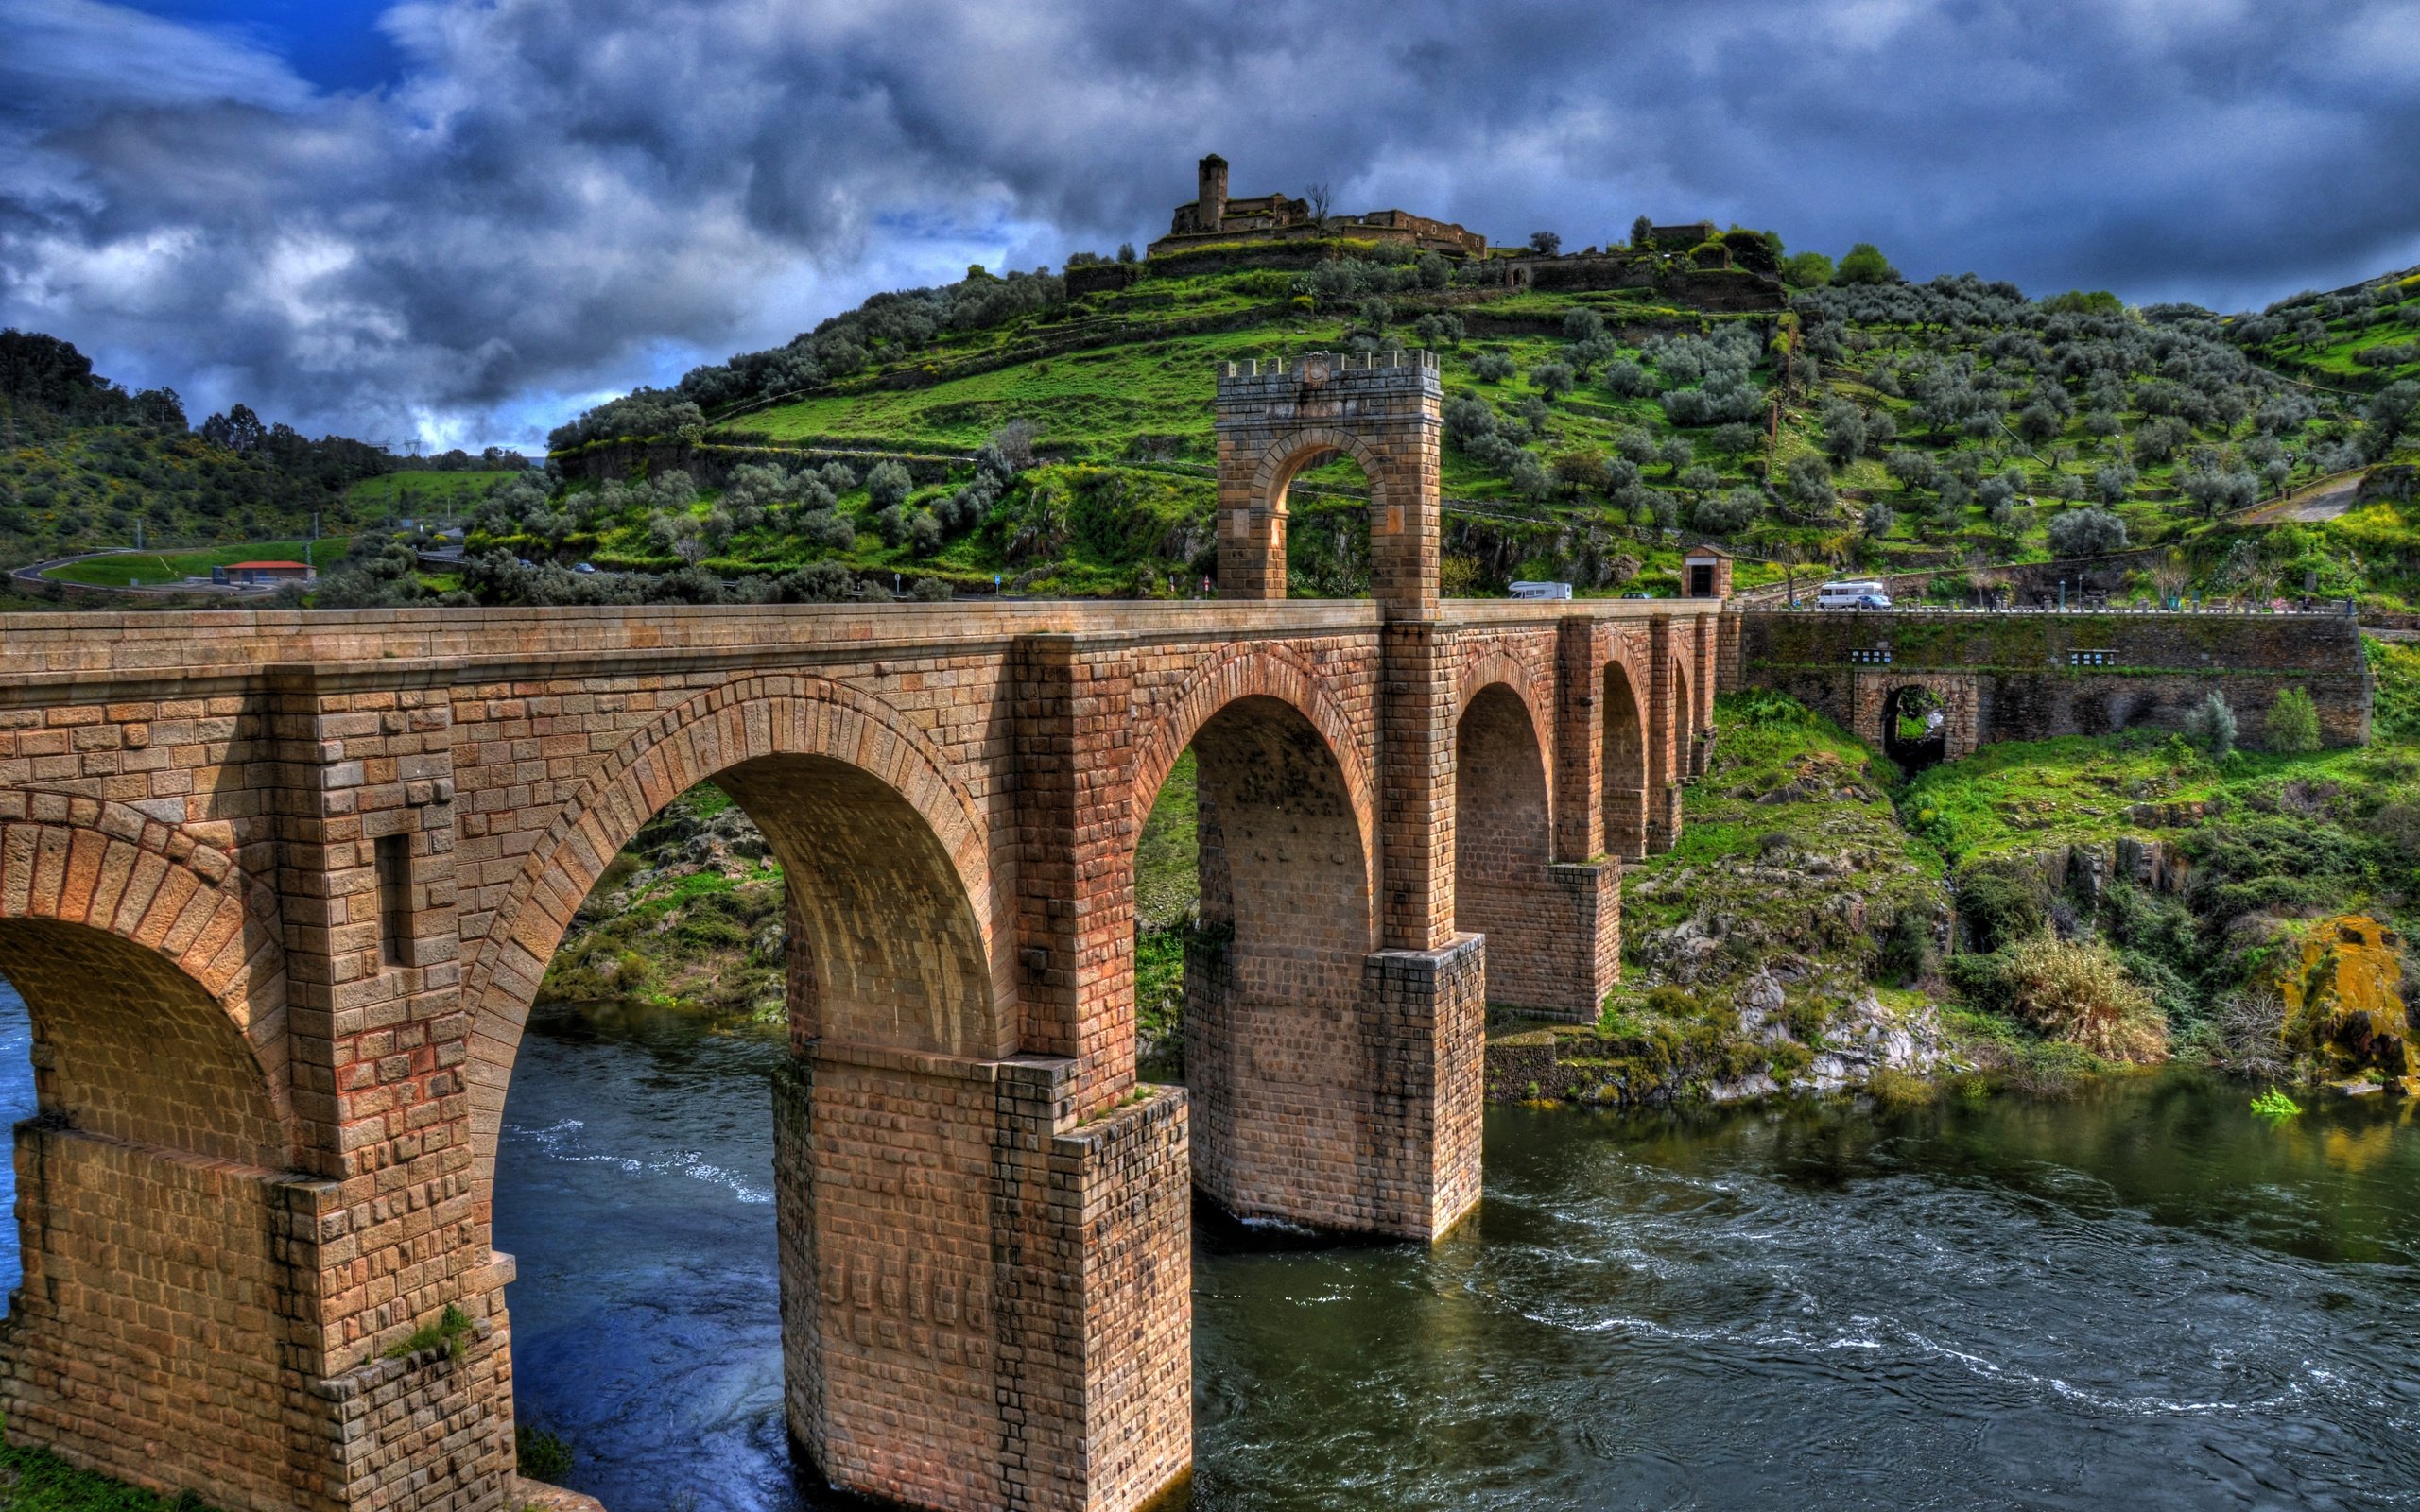 Италия каменный мост. Эстремадура Испания Римский мост. Мост Солкан Словения. Алькантарский мост (Испания). Каменный мост в Испании.